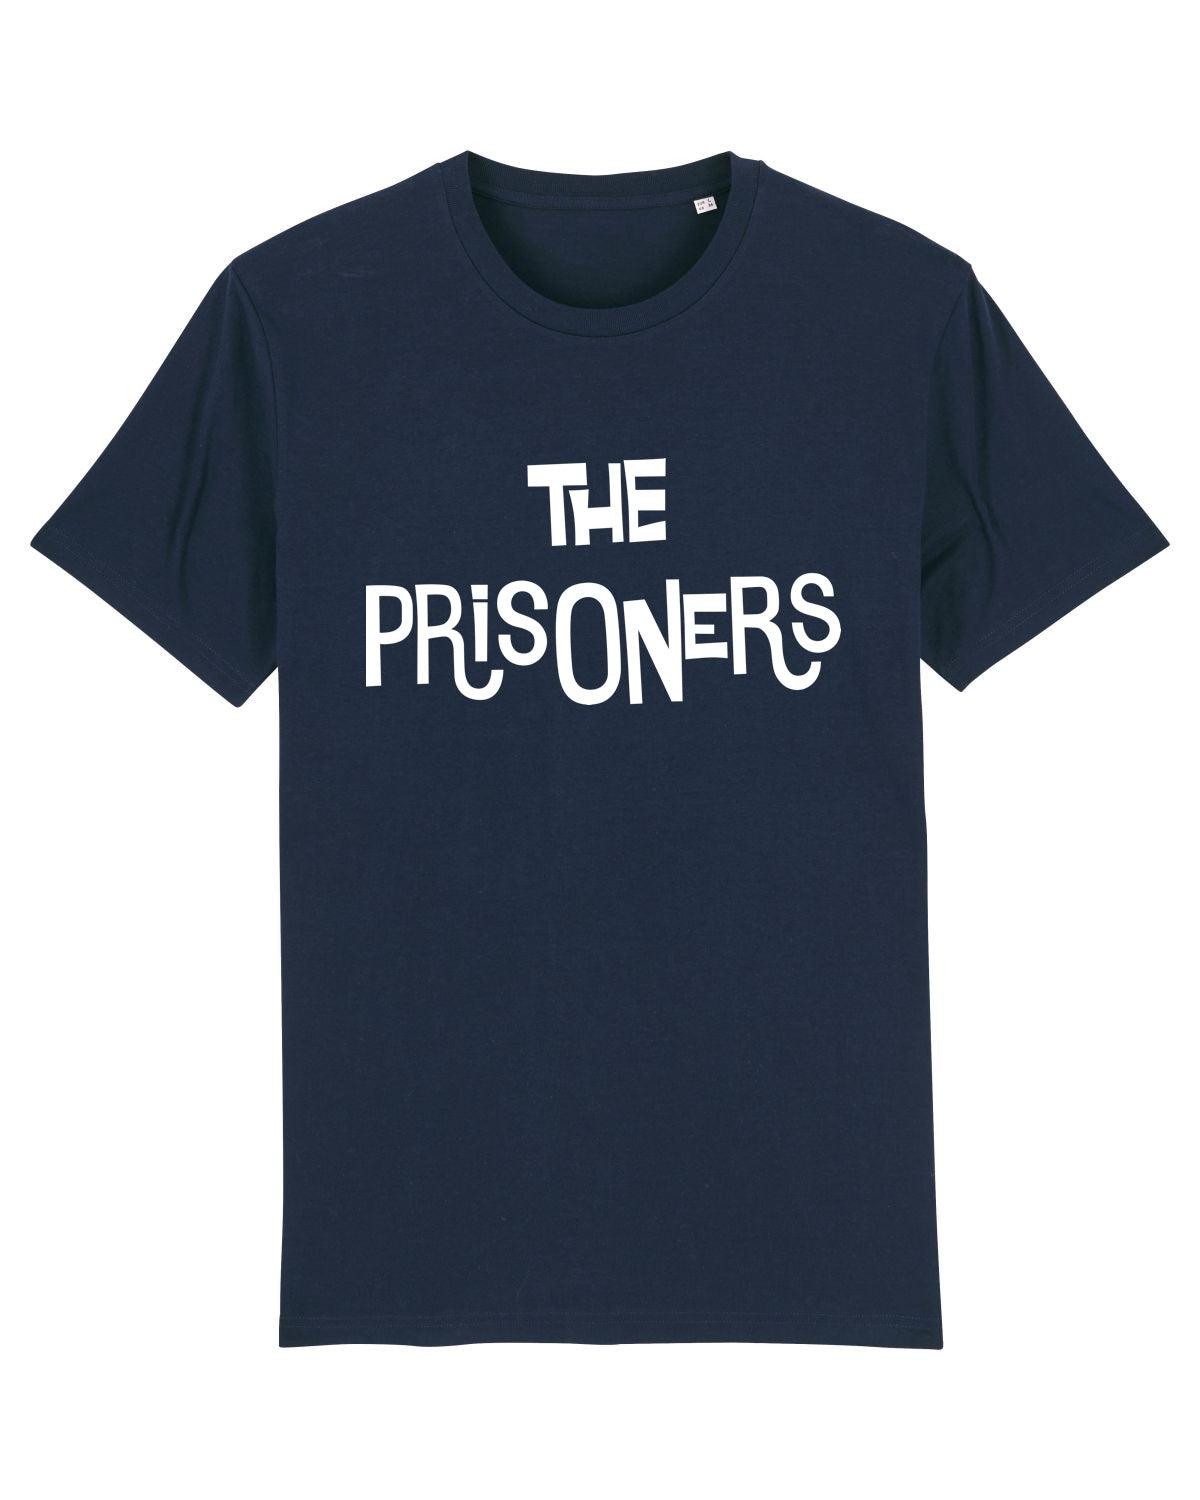 THE PRISONERS: Reunion Logo WHITE: T-Shirt Official Merchandise by Sound is Colour. - SOUND IS COLOUR